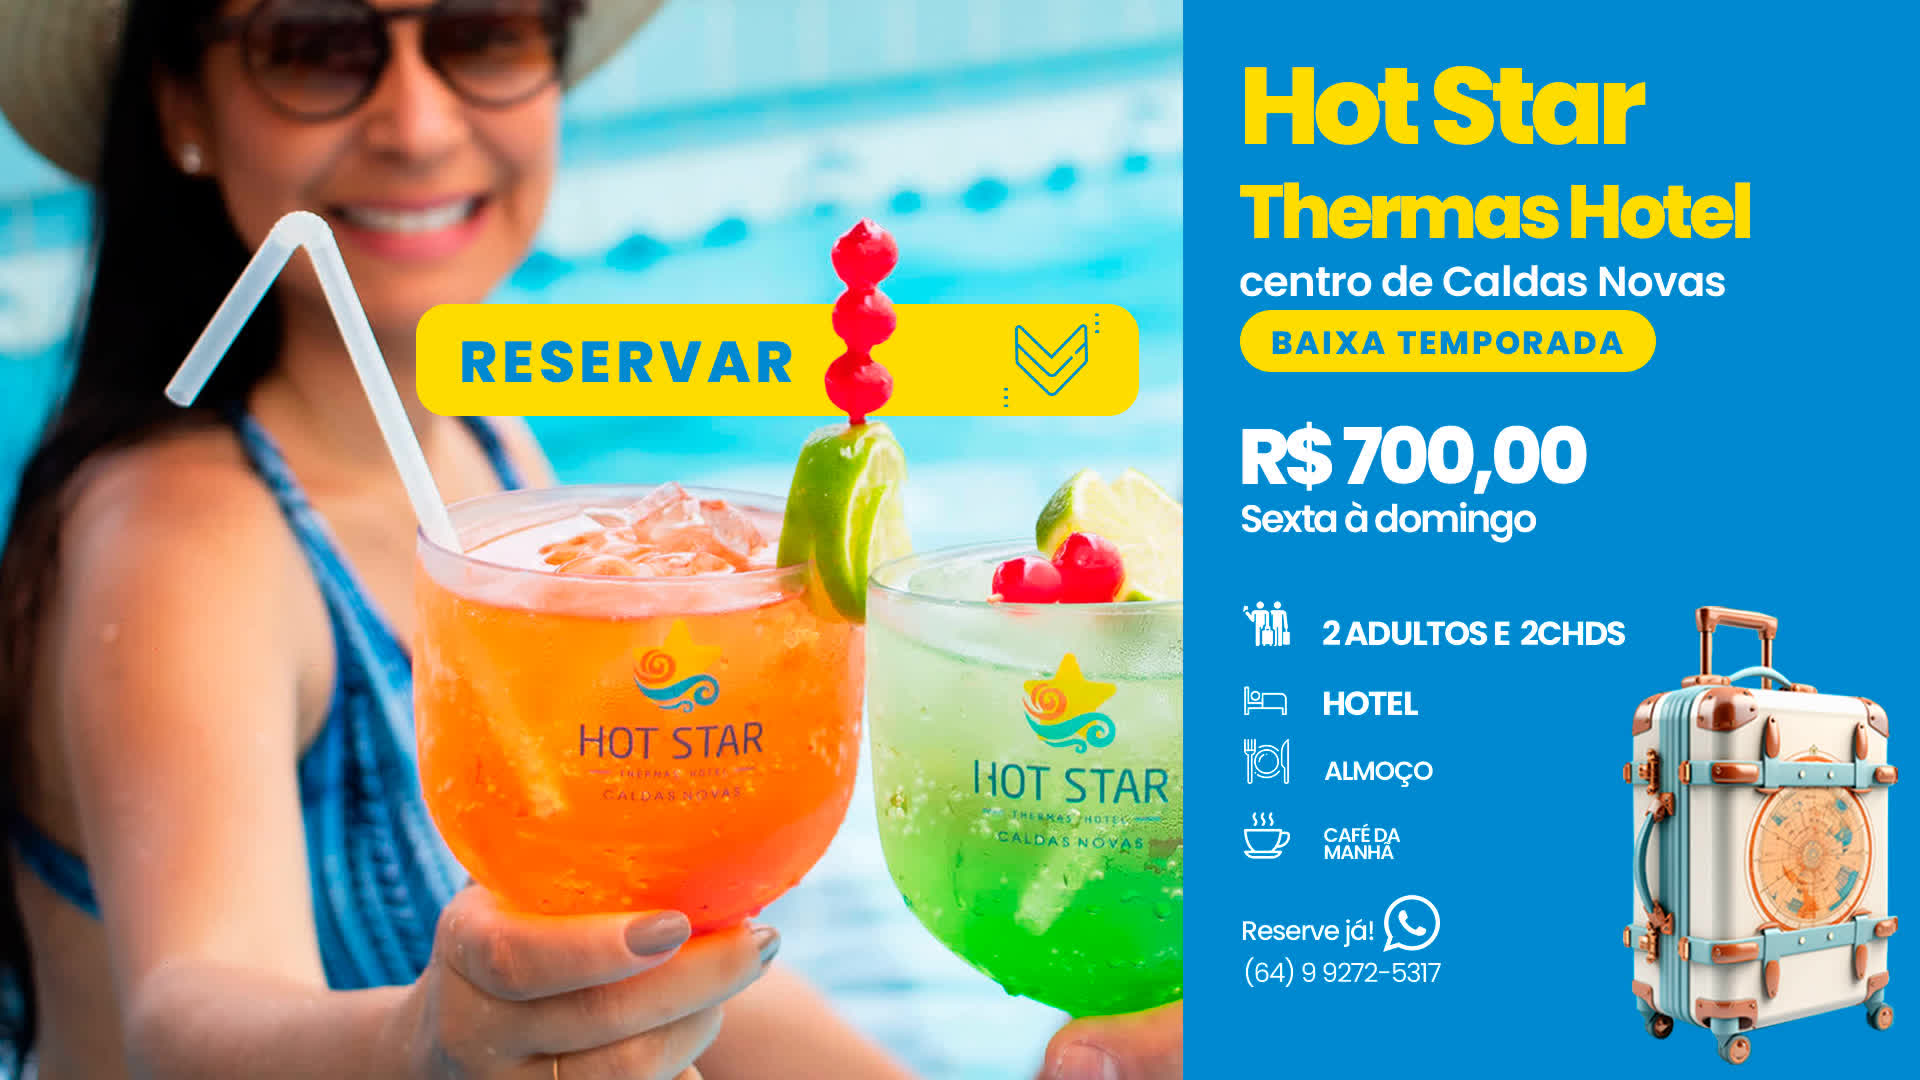 Hot Star Thermas Hotel no centro de Caldas Novas - Baixa Temporada